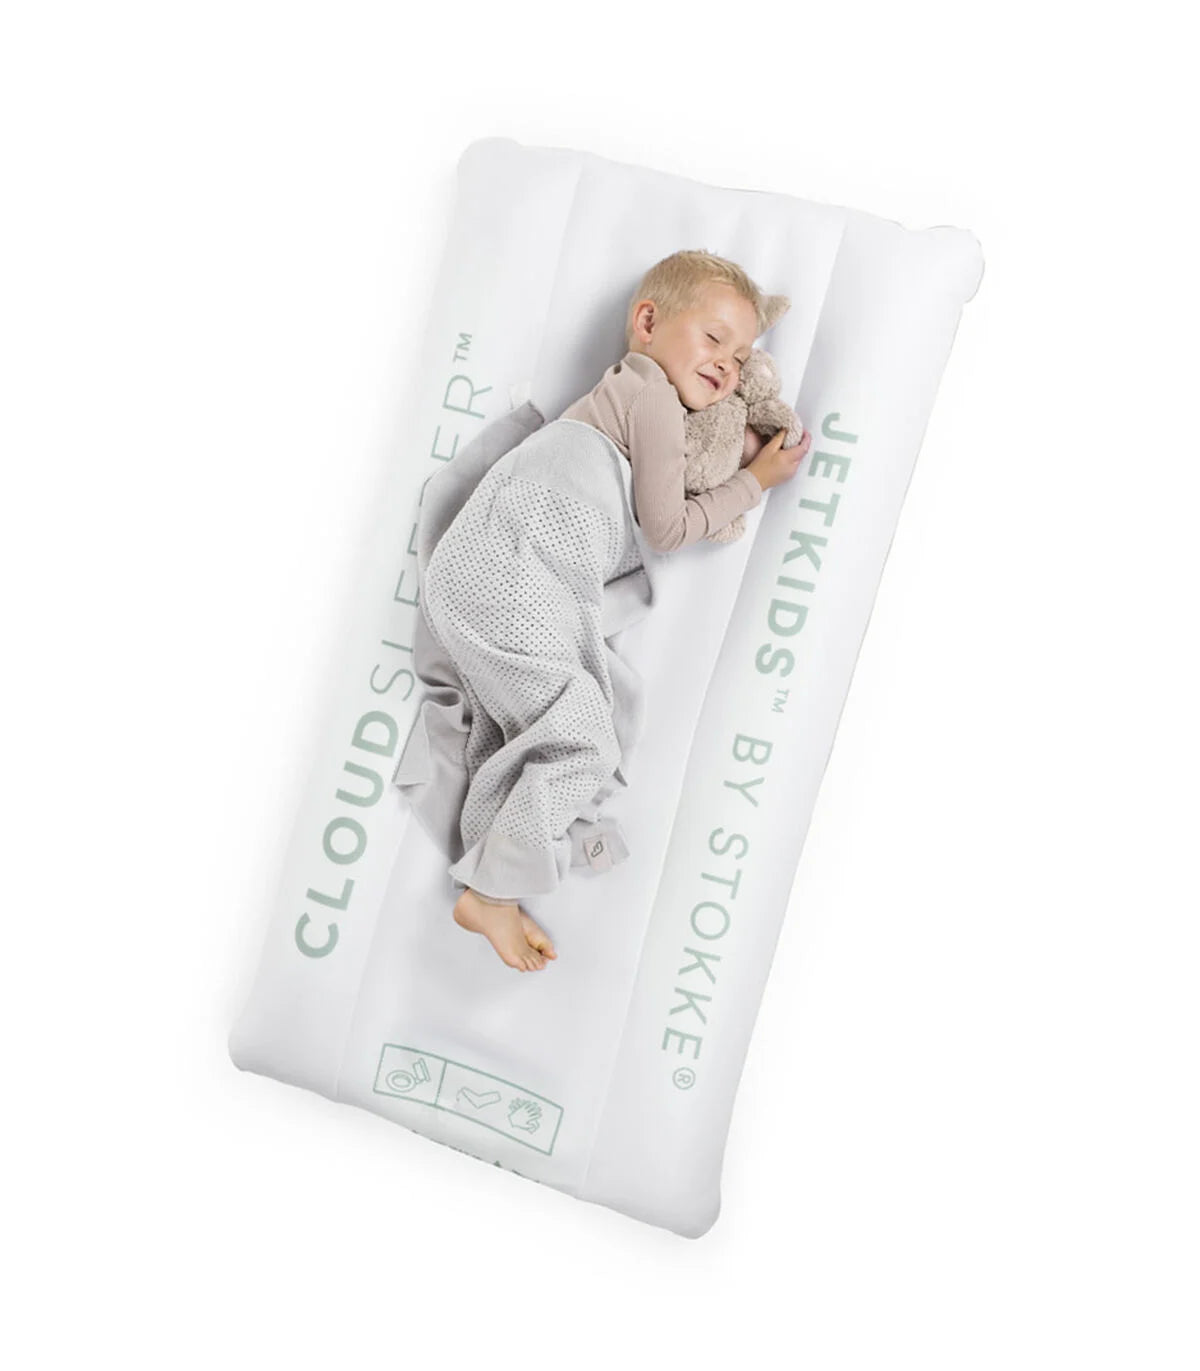 Stokke® Jetkids™ Cloudsleeper™ Inflatable Kids' Bed